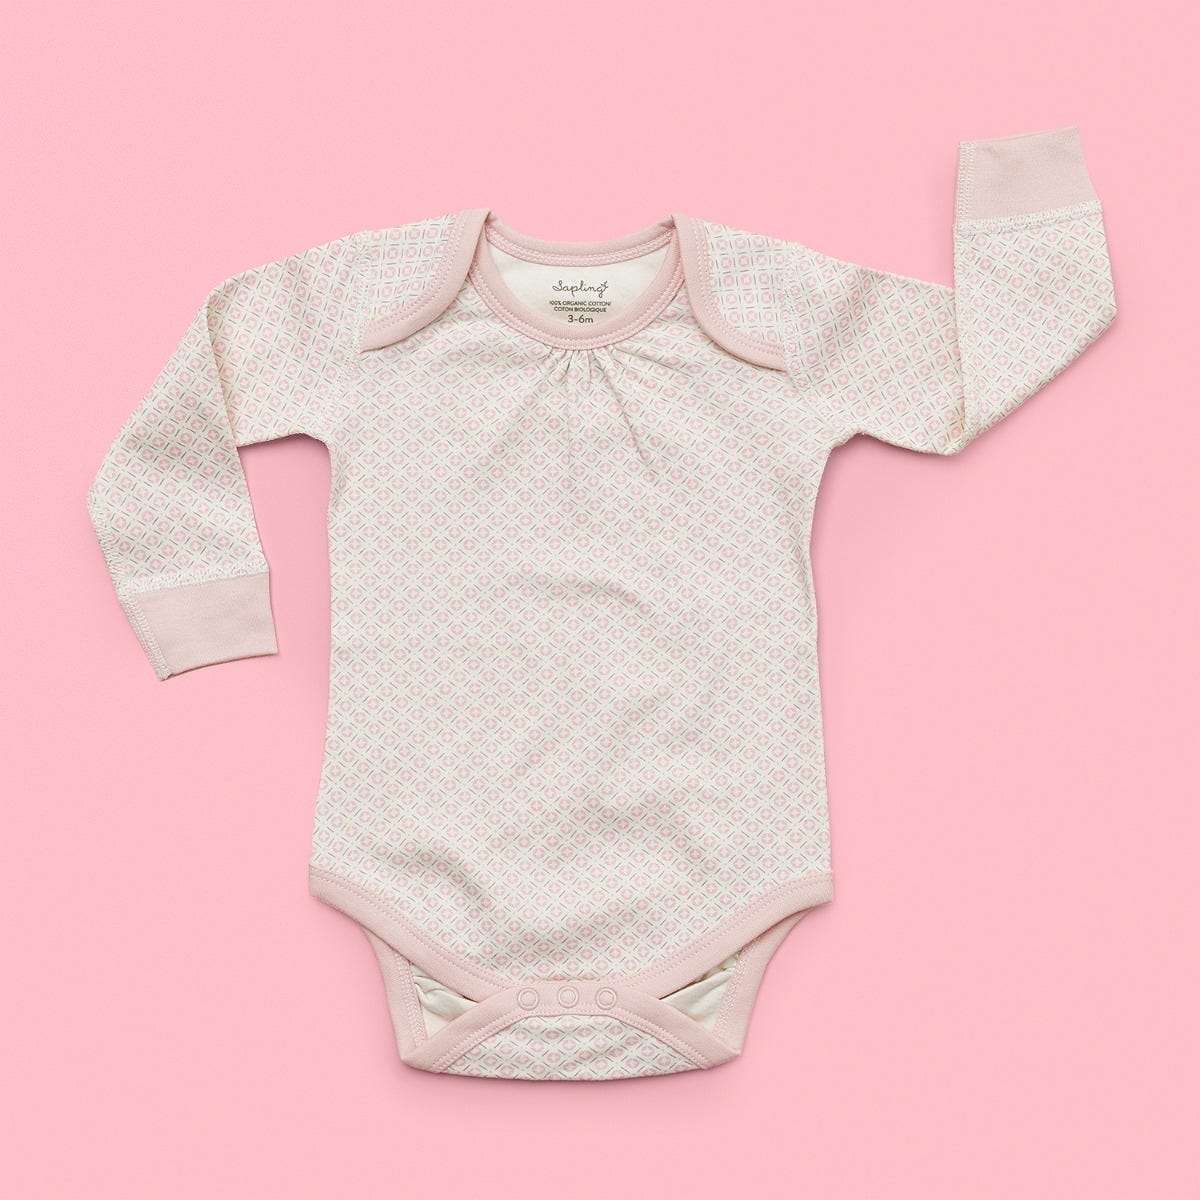 Sapling Child AU Dusty Pink Bodysuit sized 3 - 6 months